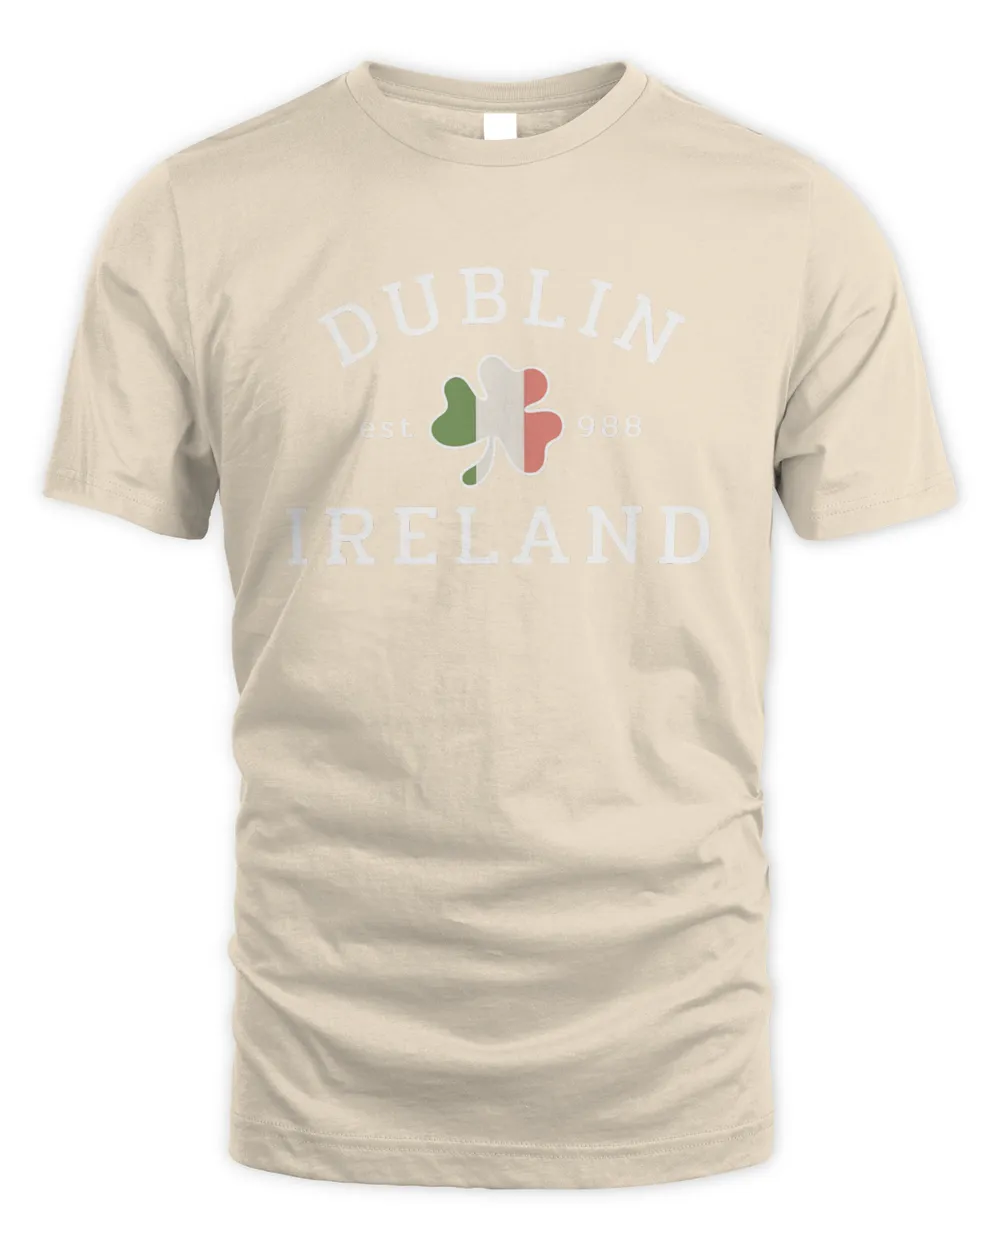 Dublin Ireland St Patricks Day T-shirt_837